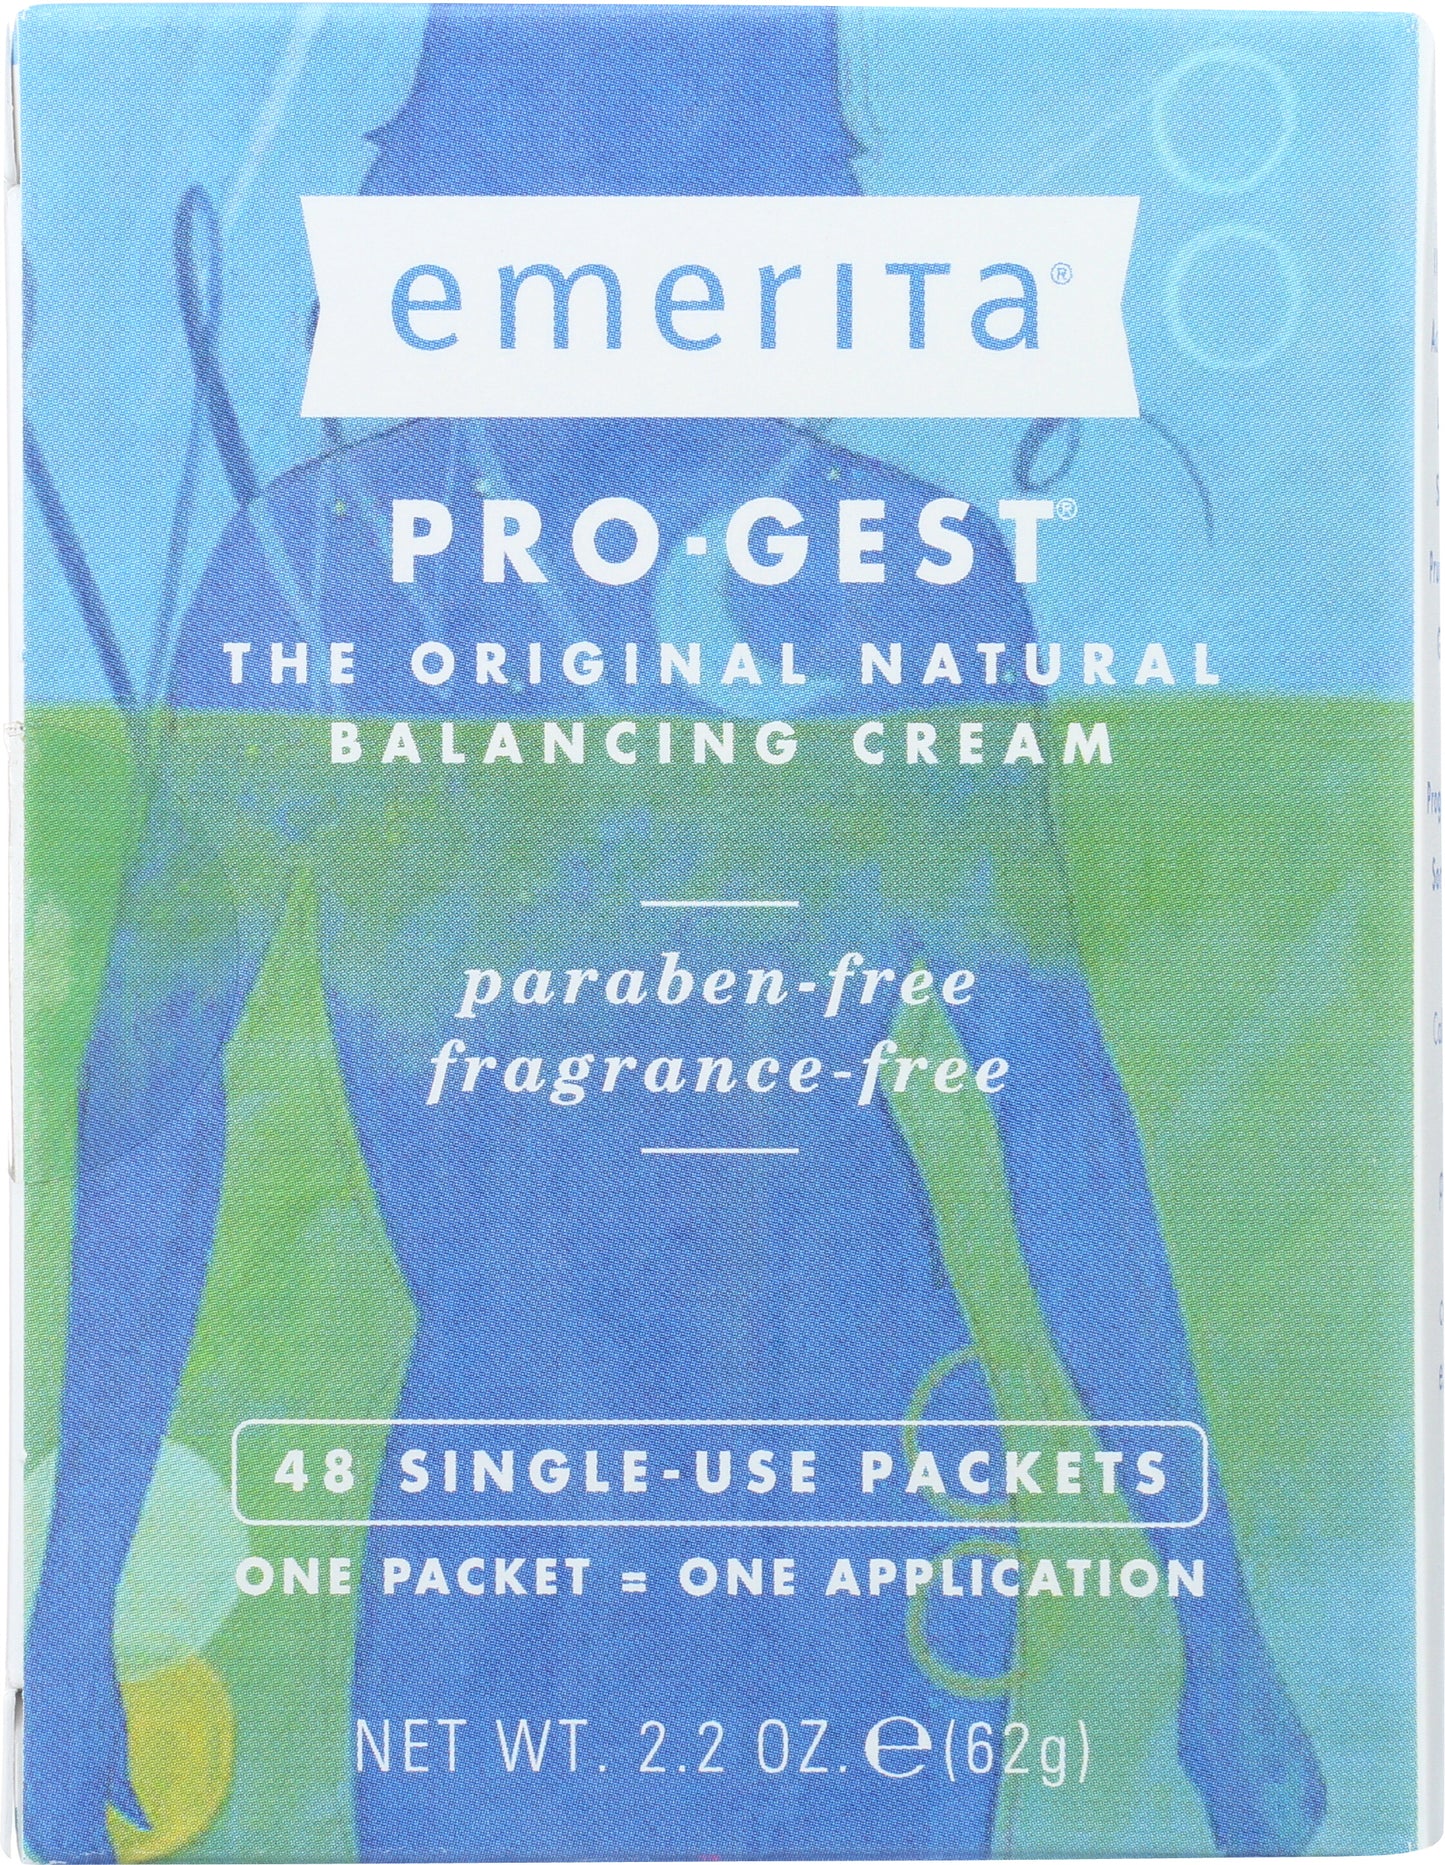 Emerita Pro-gest Balancing Cream 48 Packets Front